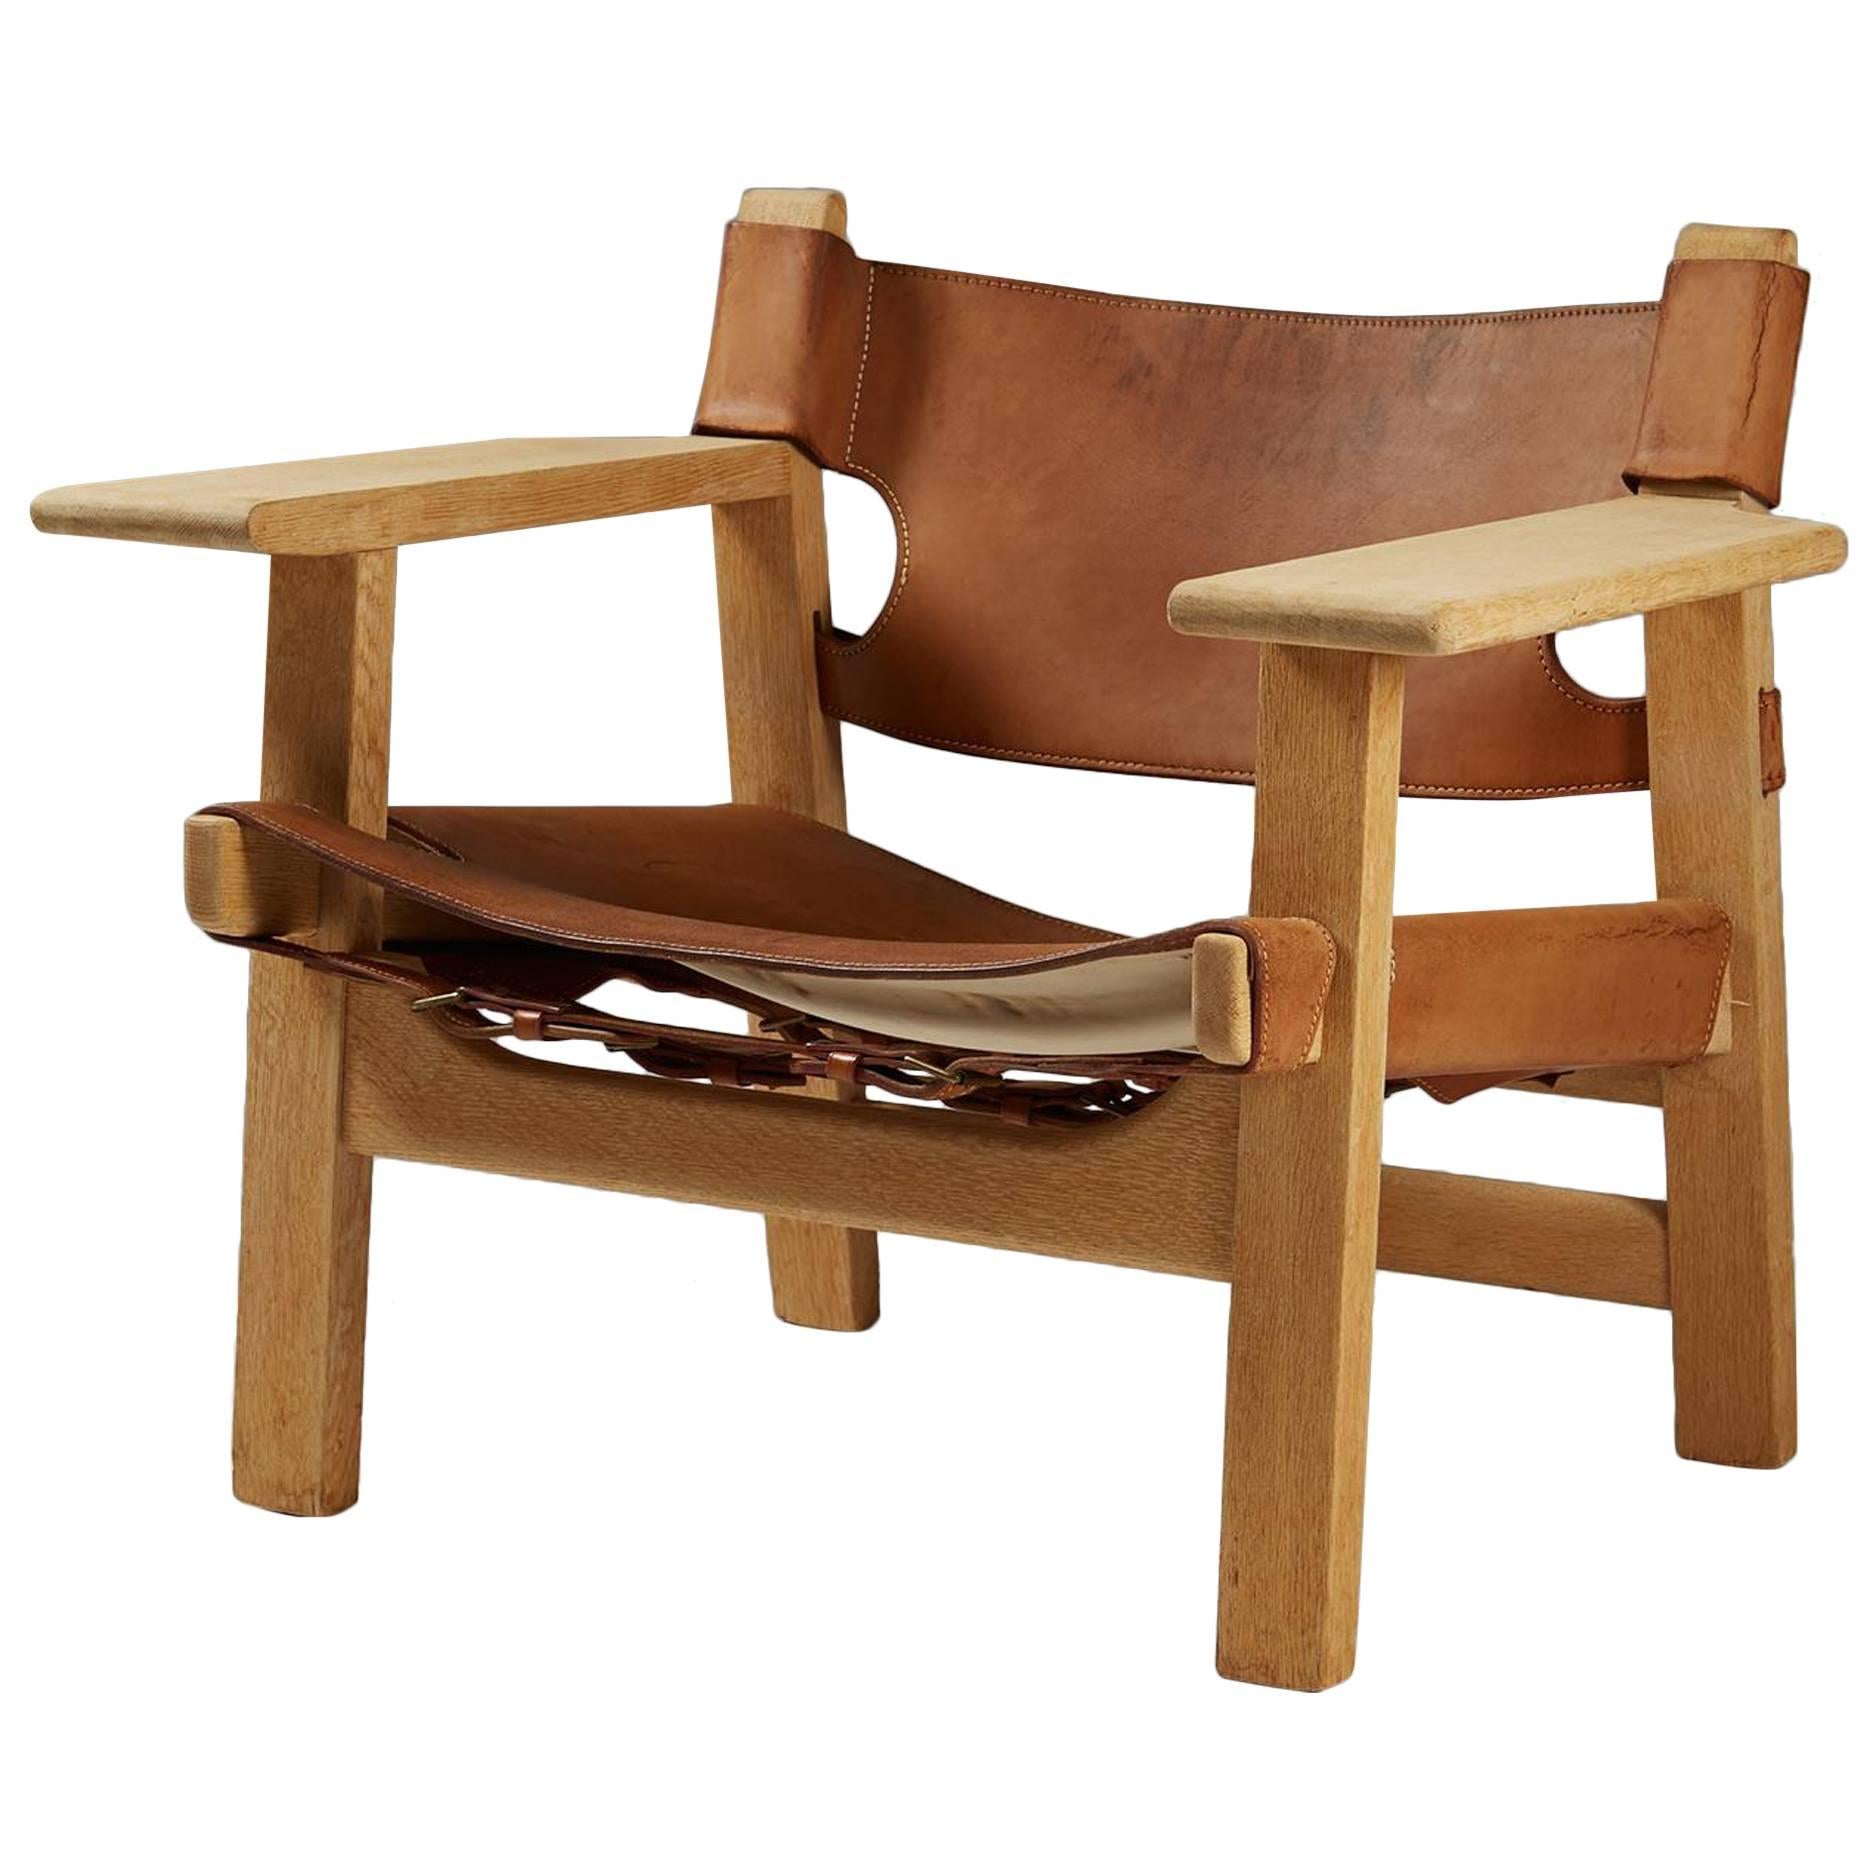 Armchair “Spanish Chair” Designed by Börge Mogensen, Denmark, 1950s